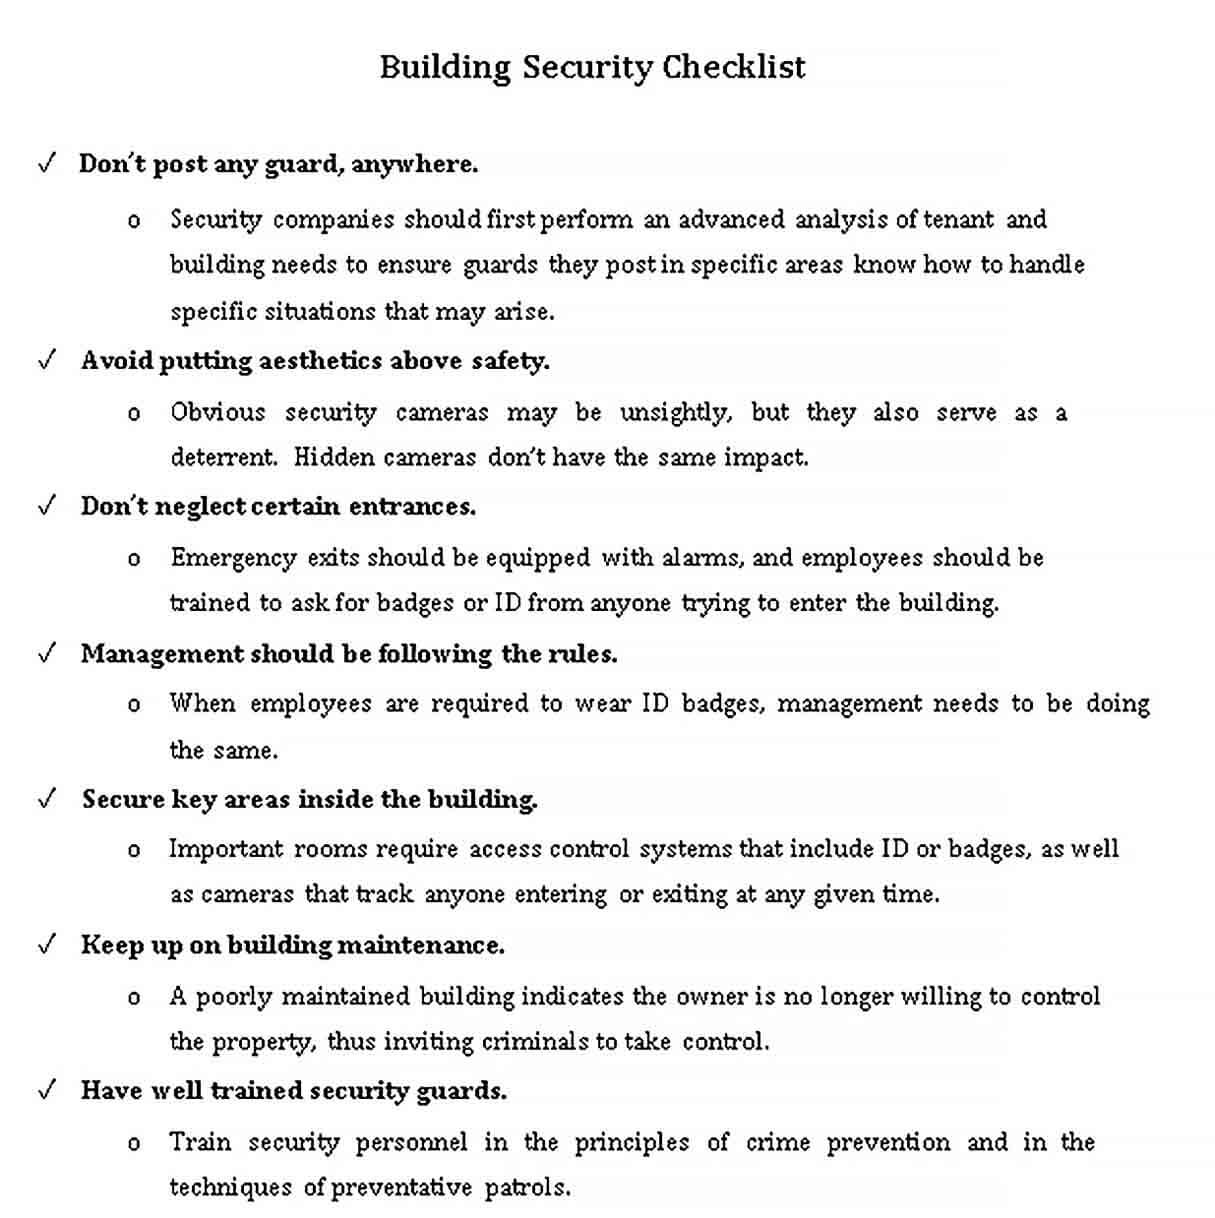 Sample Building Security Checklist Format